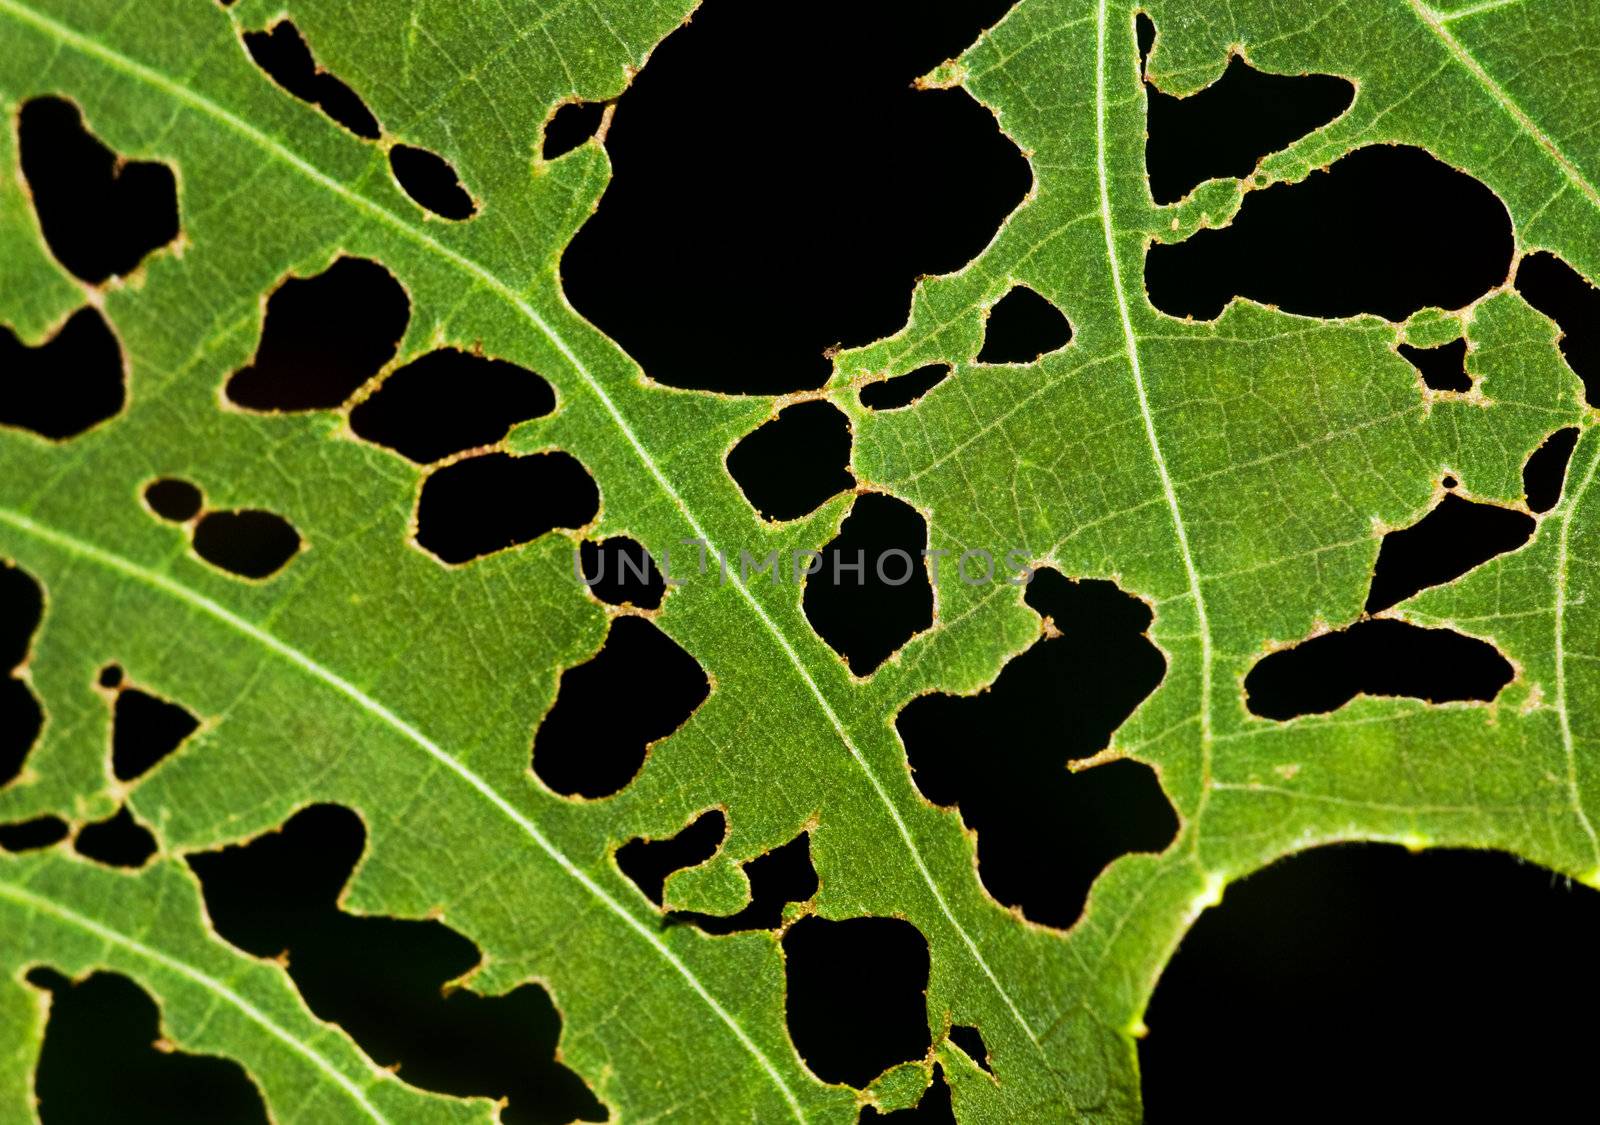 Leaf with holes. by szefei